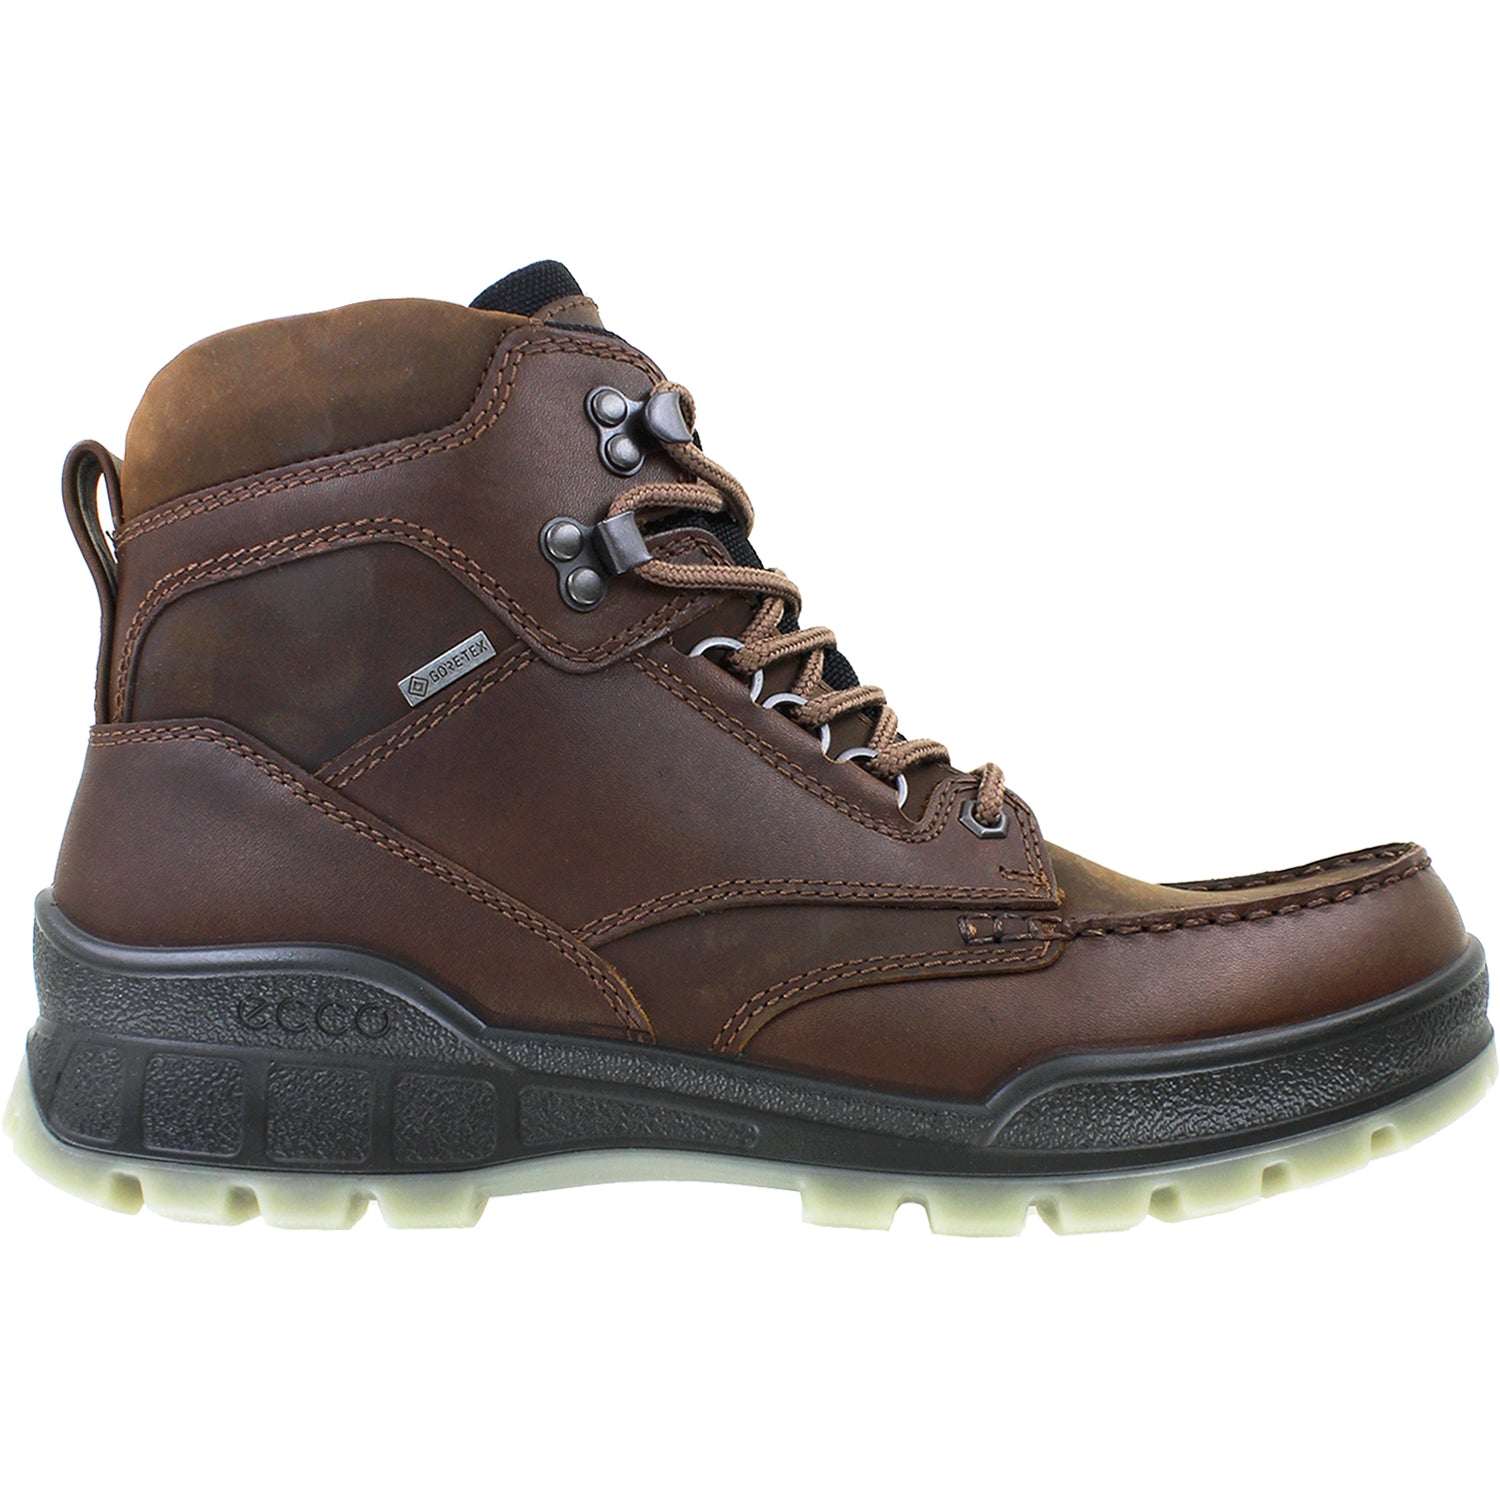 Ecco Track 25 High GTX Bison | Men's Hiking Boots | Footwear etc.